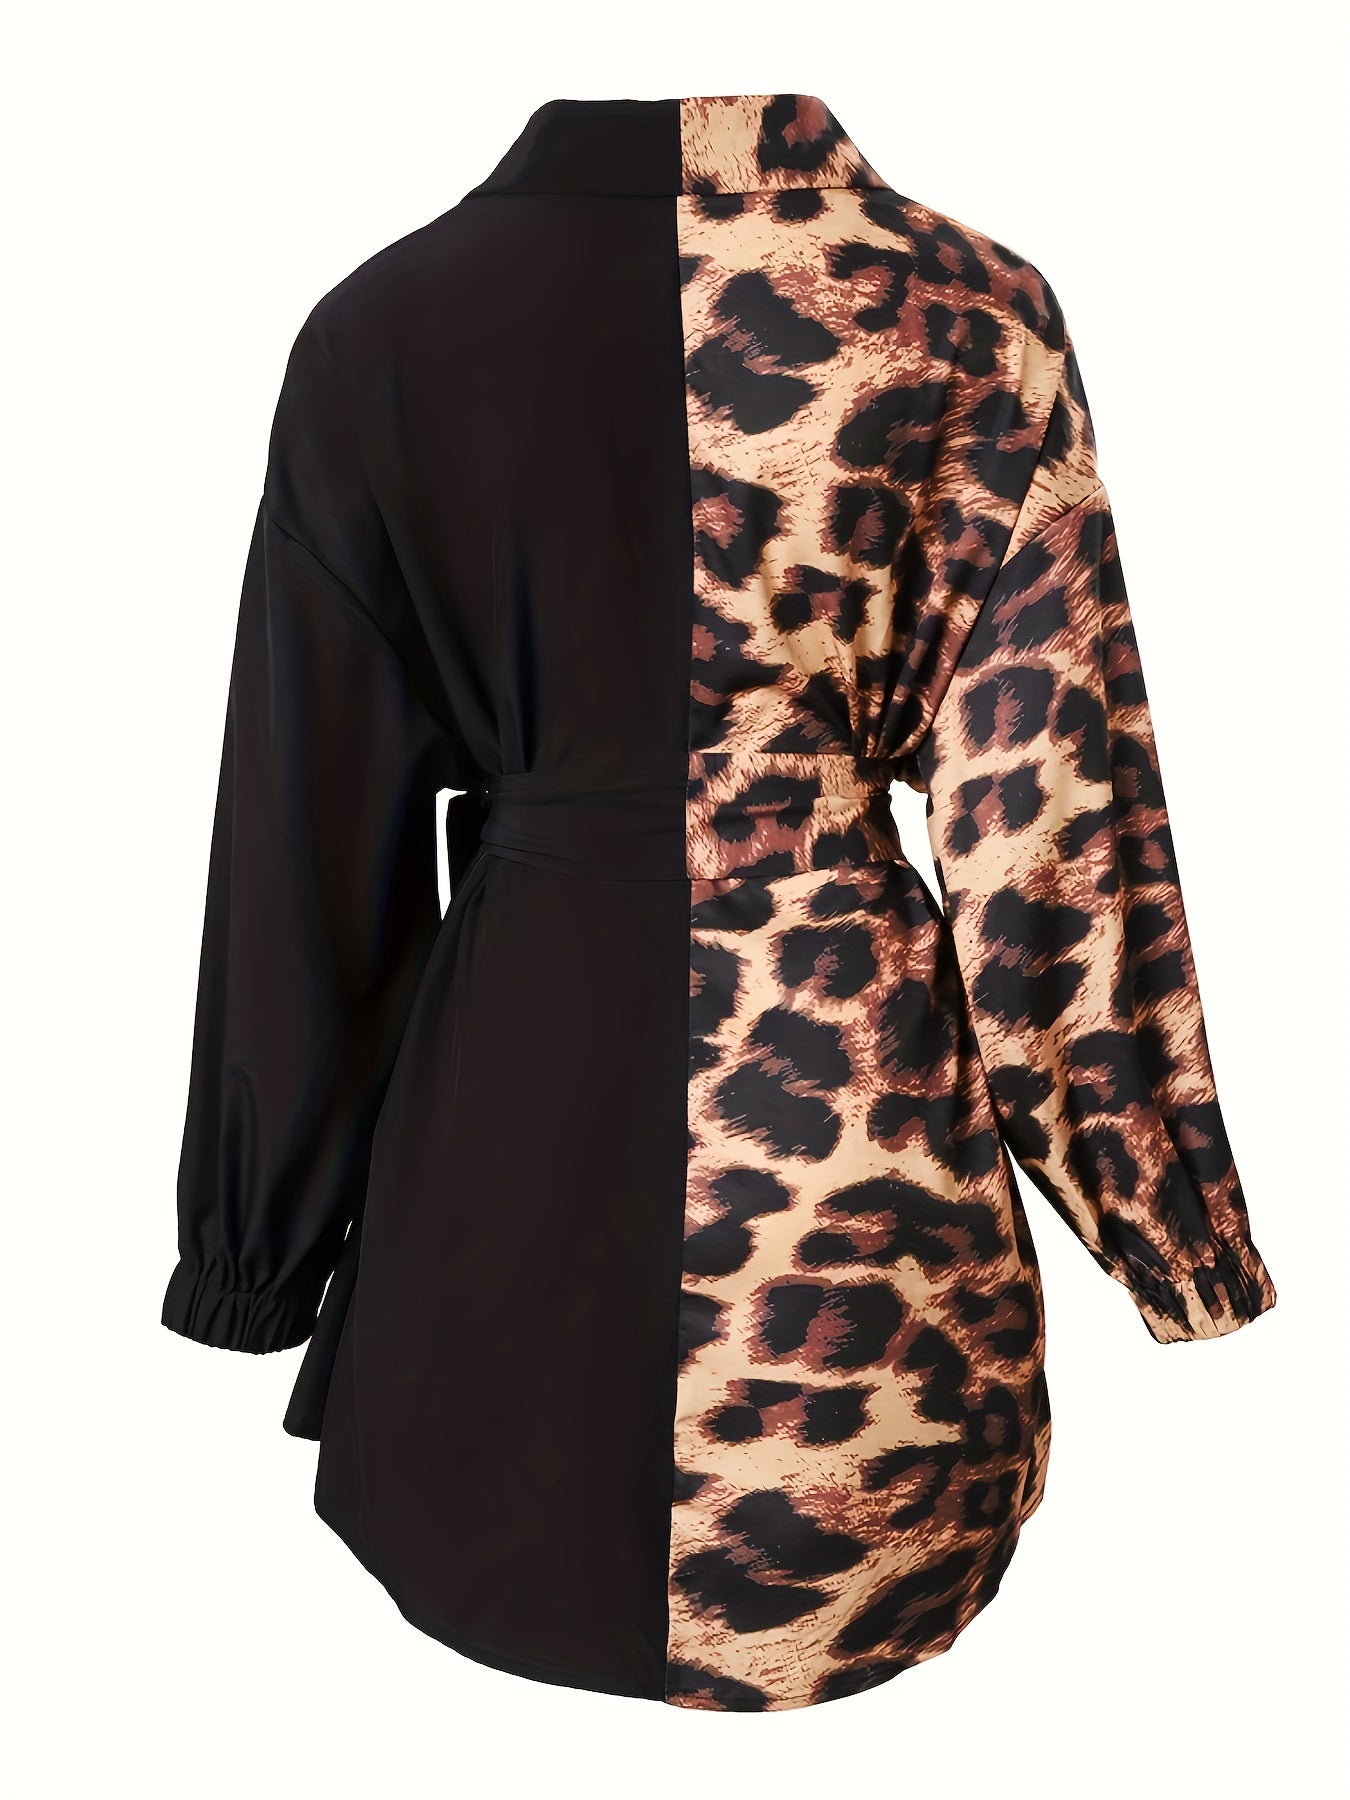 Plus Size Trendy Blouse, Women's Plus Colorblock Leopard Print Long Sleeve Button Up Lapel Collar Tunic Shirt Top With Belt